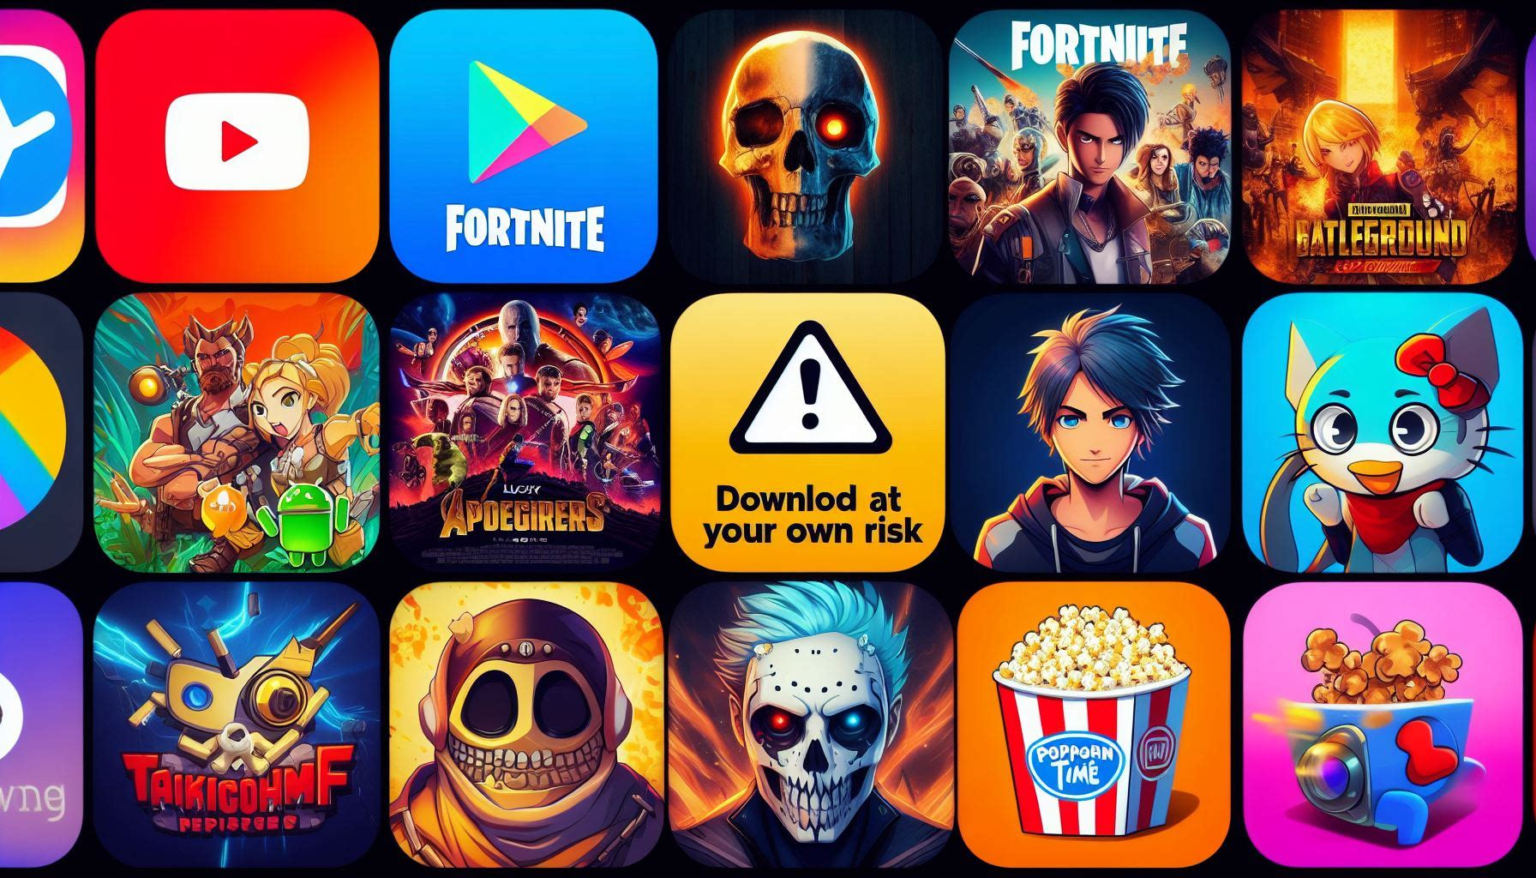 instal google play store app